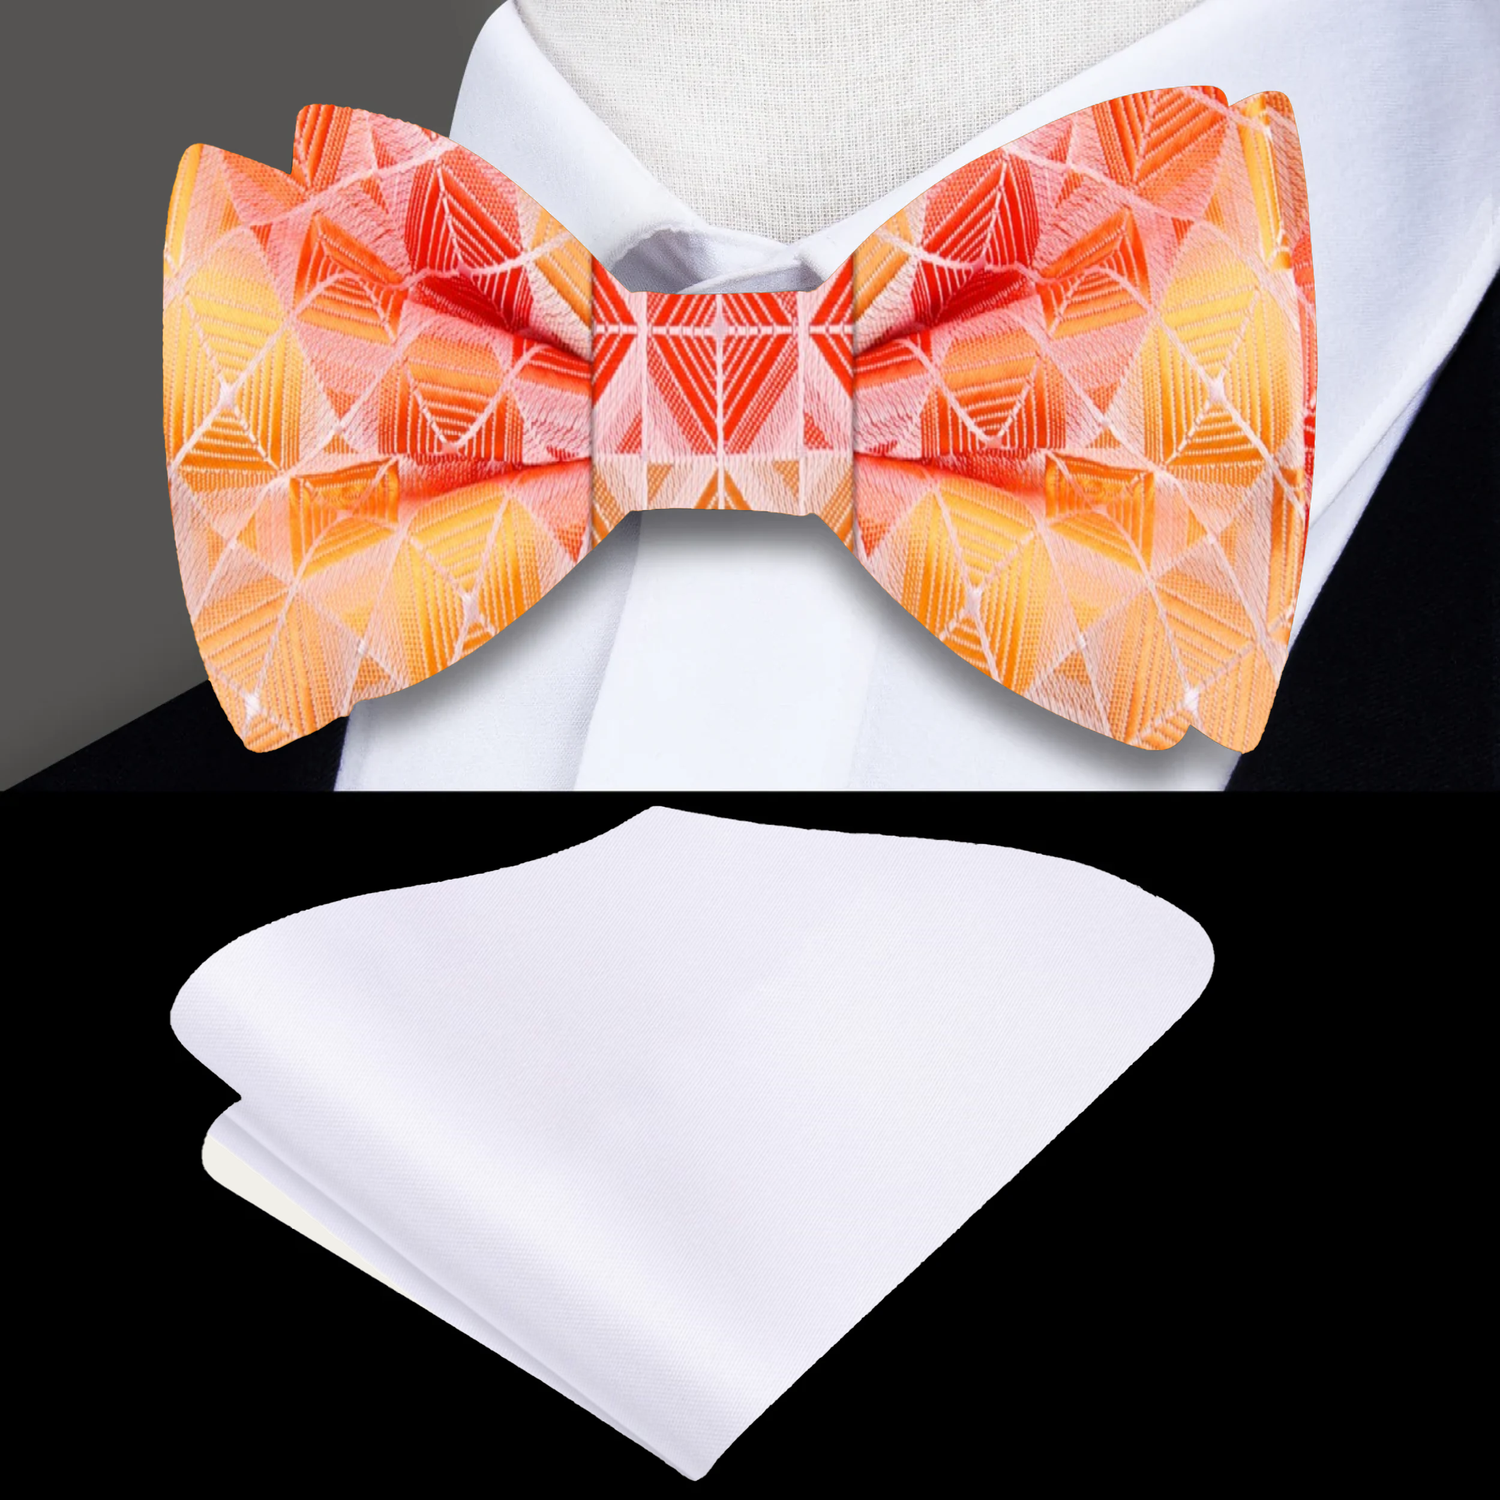 Main: Shades of Orange Geometric Blocks Bow Tie and Light Grey Square on Suit